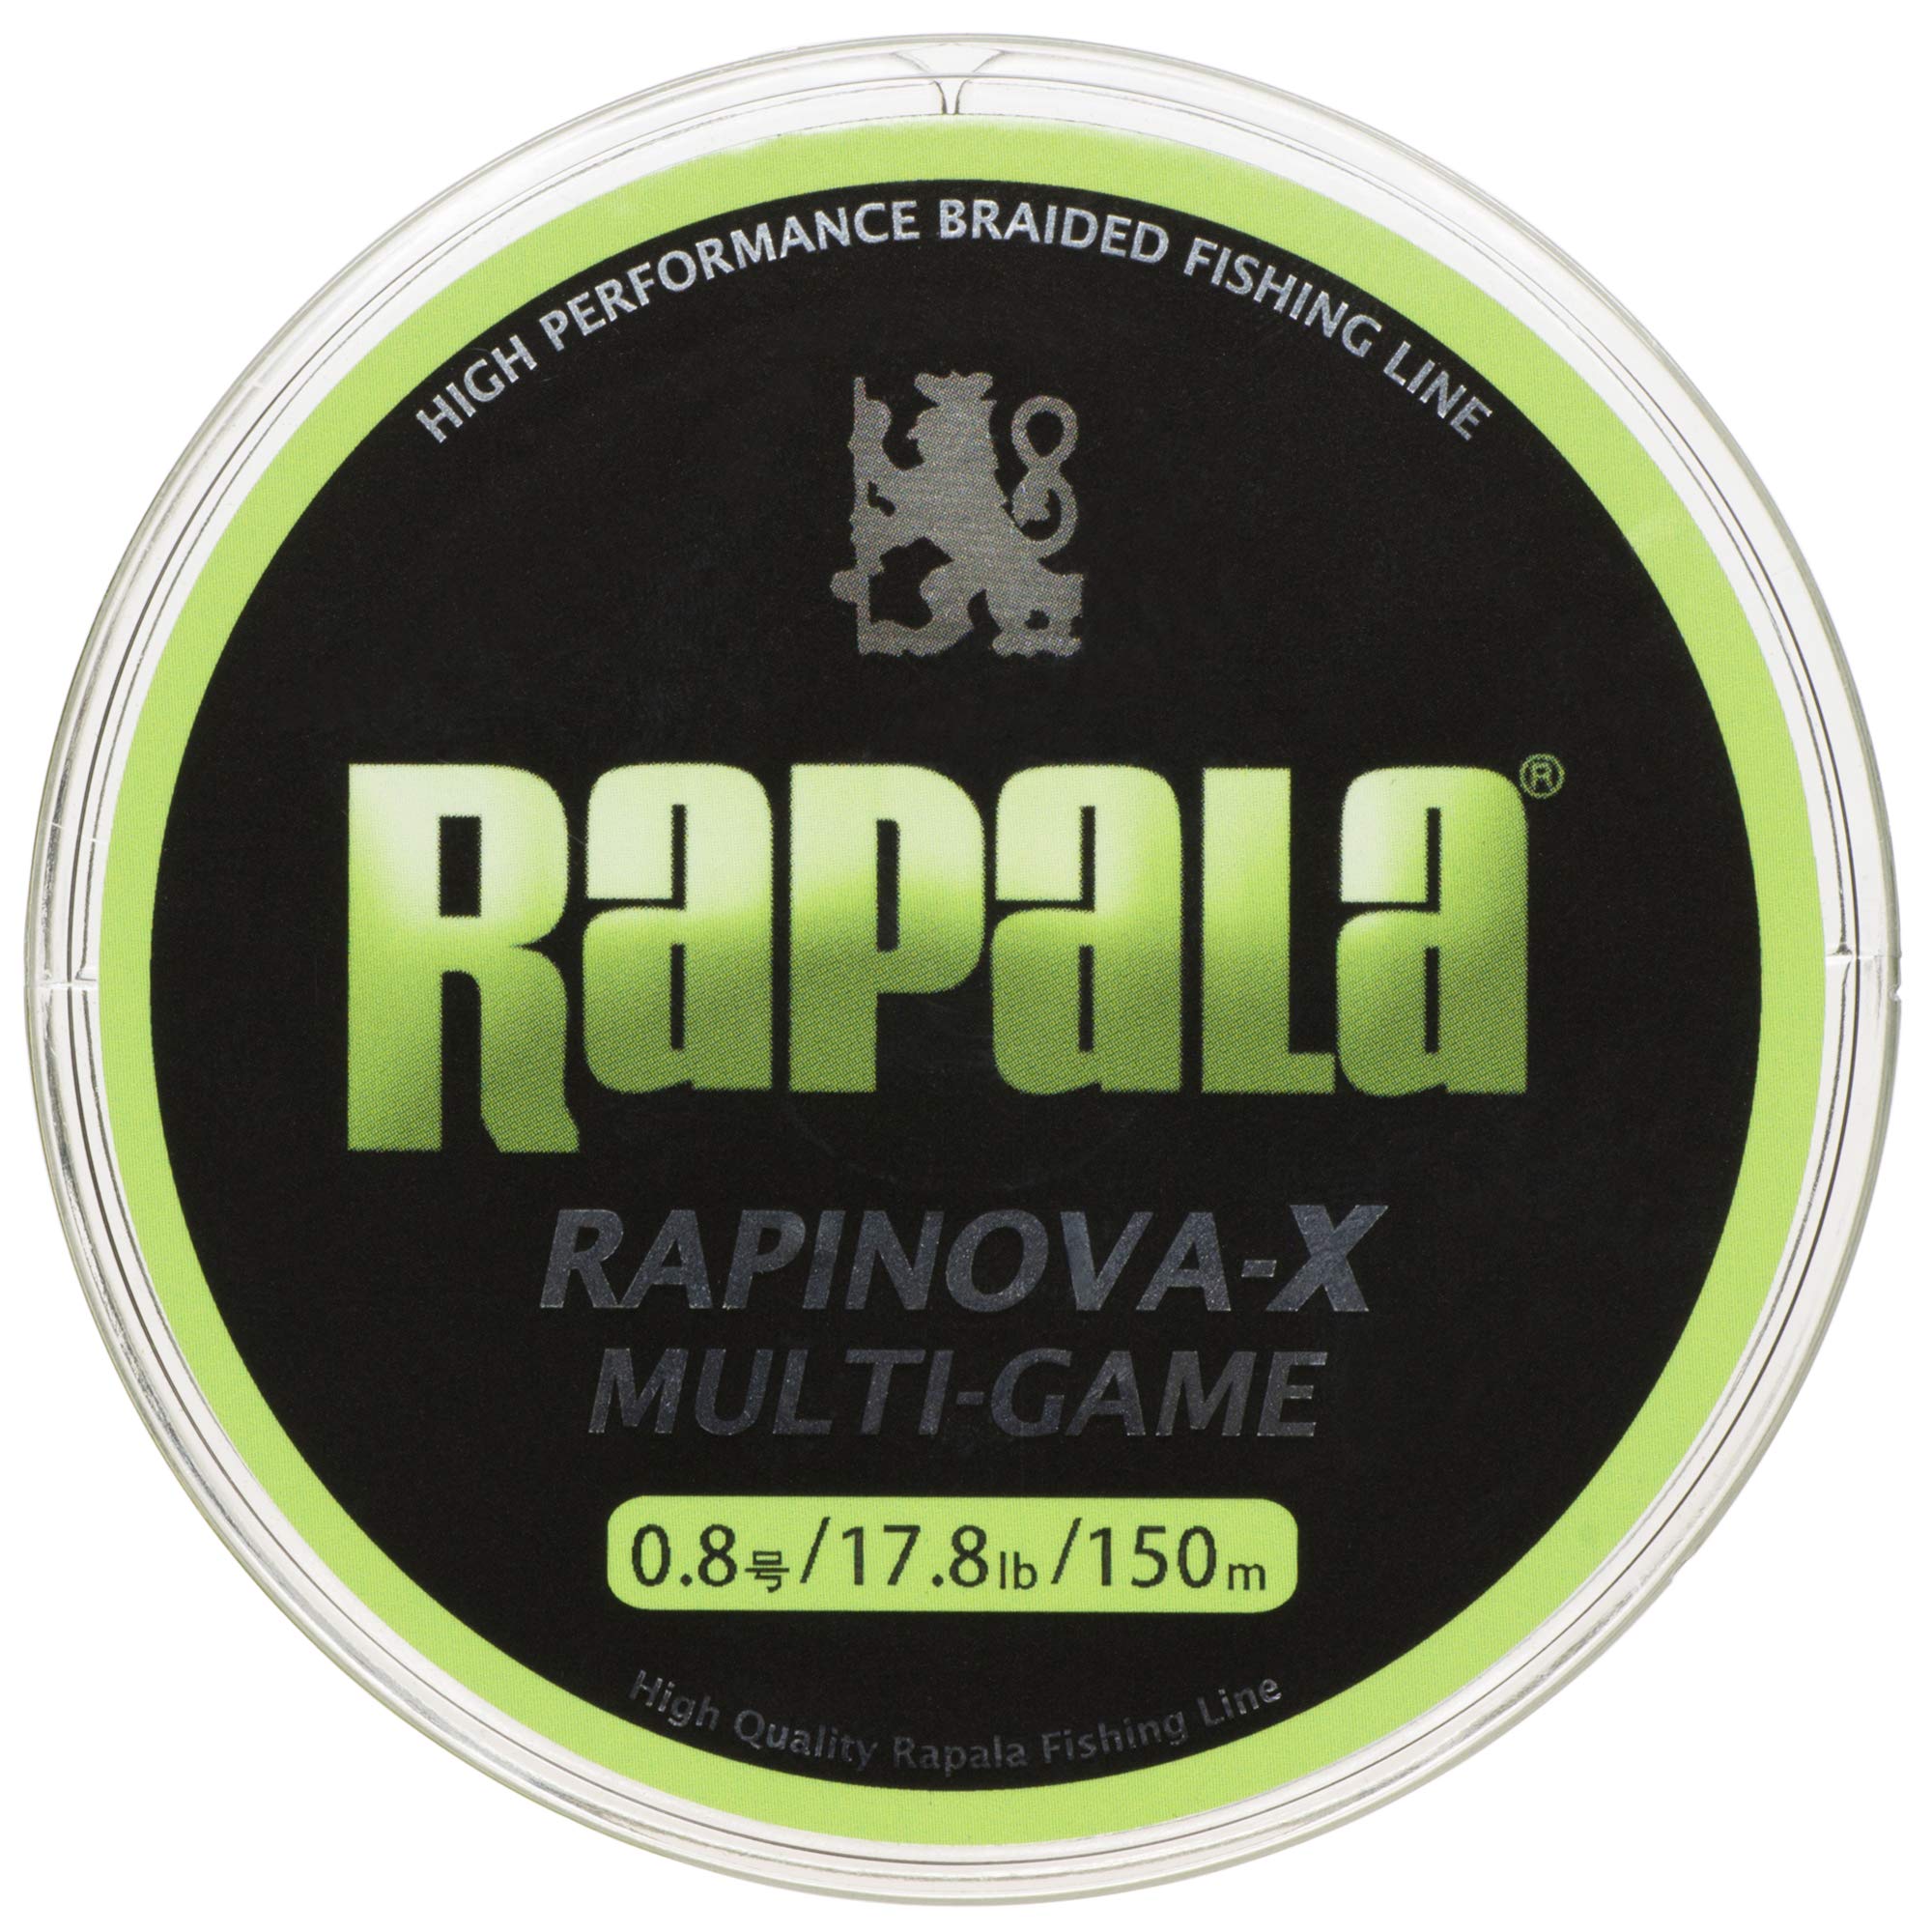 Rapala( Rapala ) PE line la Pinot vaX multi game 150m 0.8 number 17.8lb 4ps.@ braided lime green RLX150M08LG